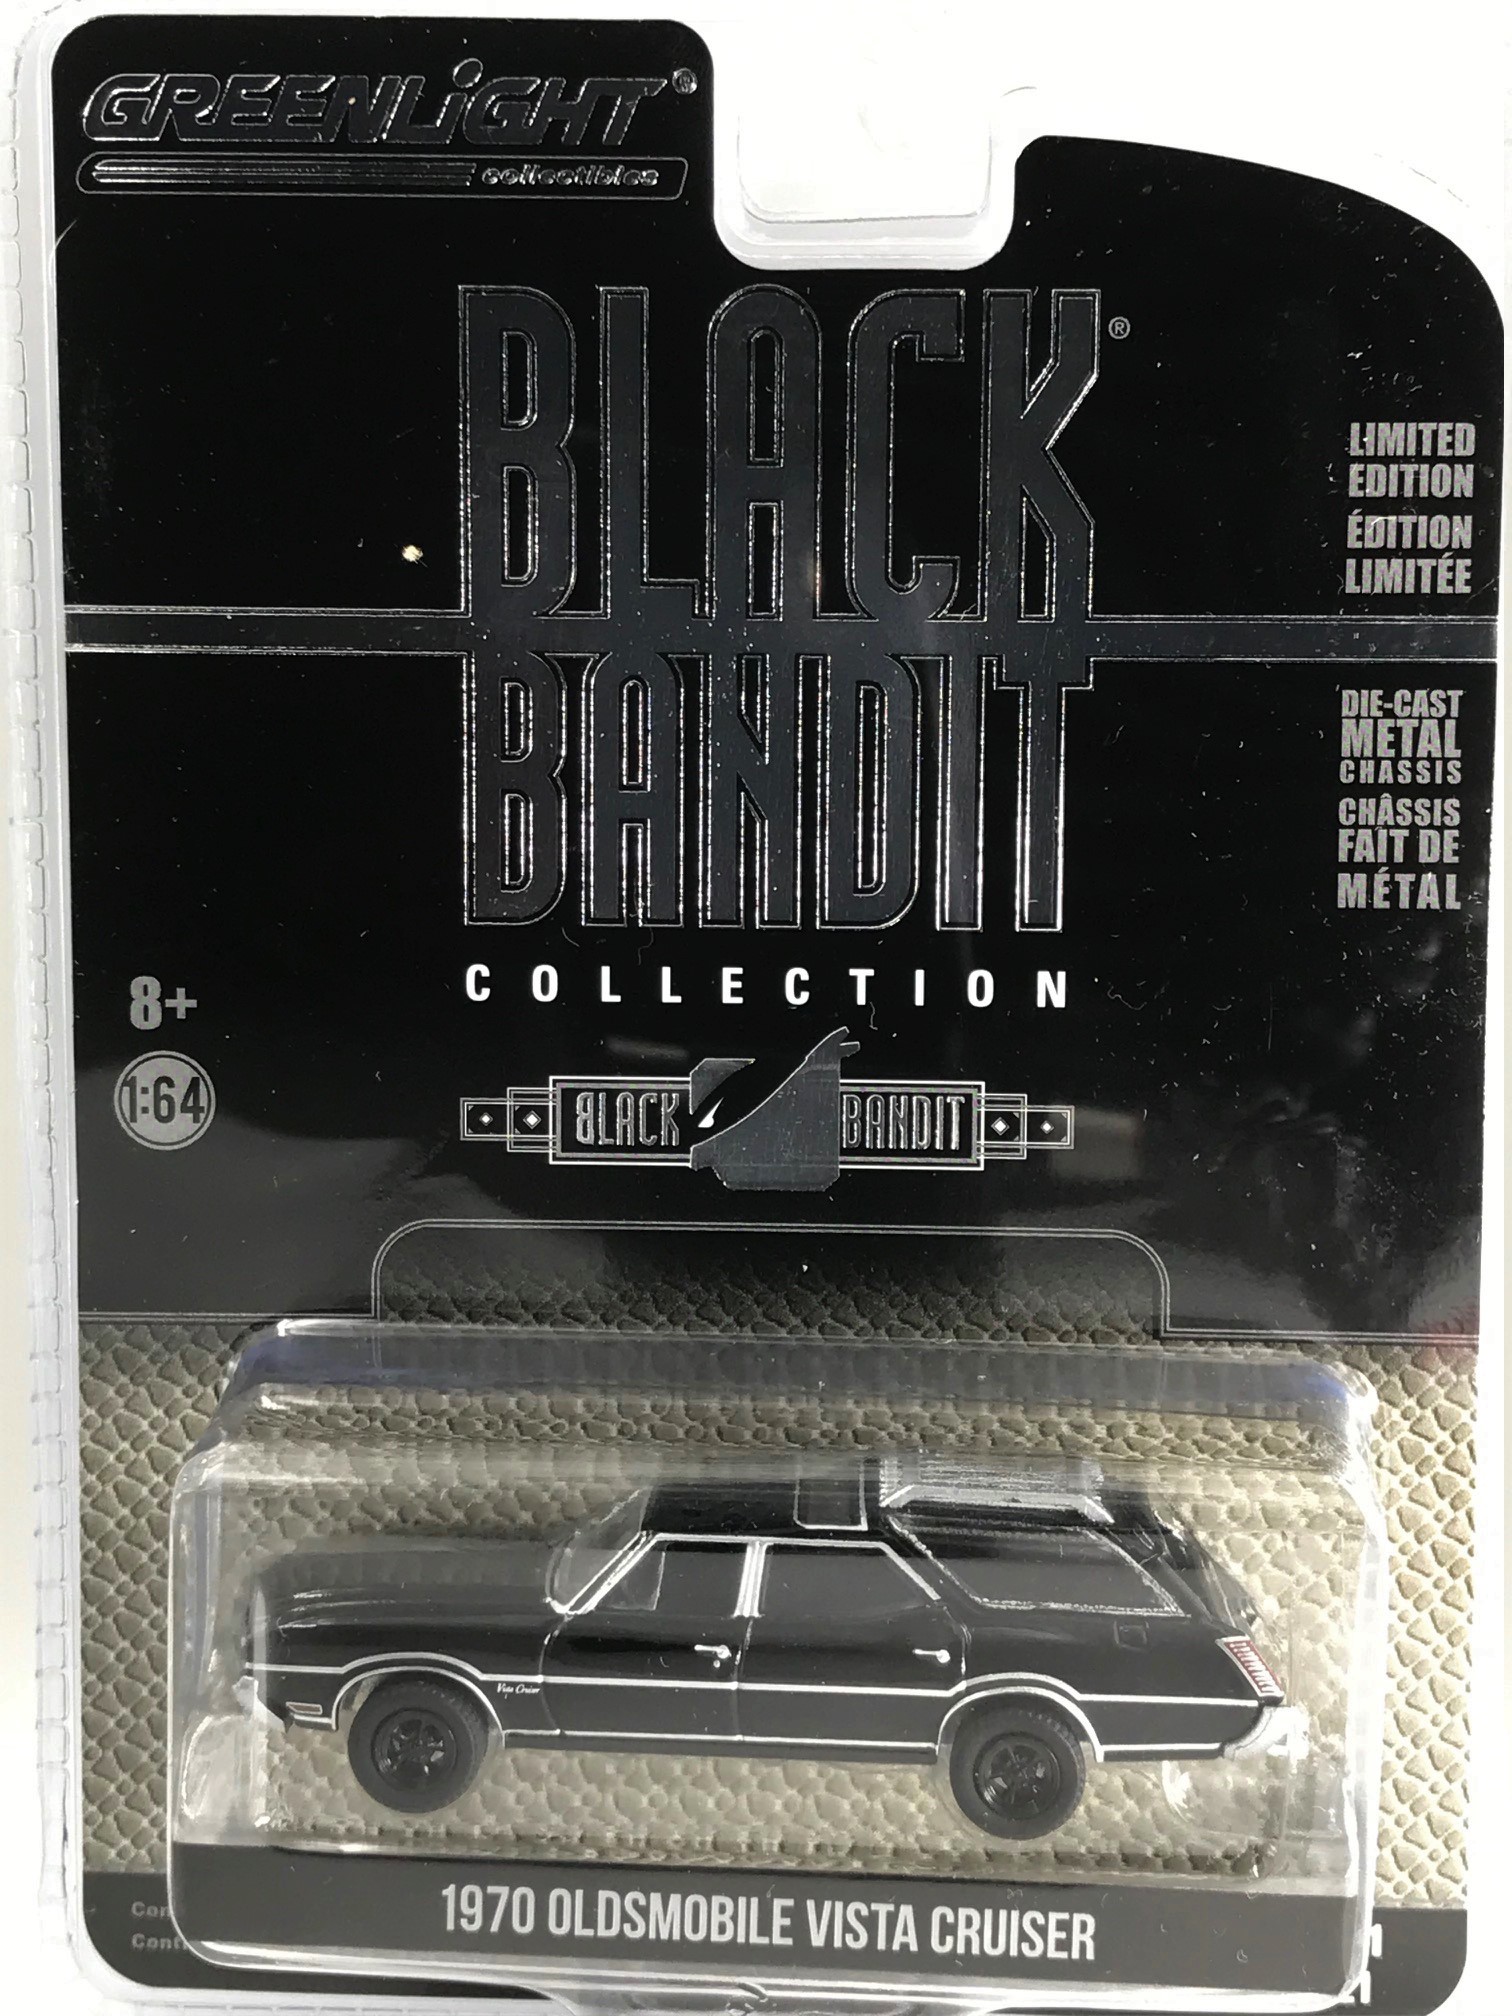 Greenlight 1:64 Black Bandit Series 21 - Complete set of 6 cars - 1:64 ...